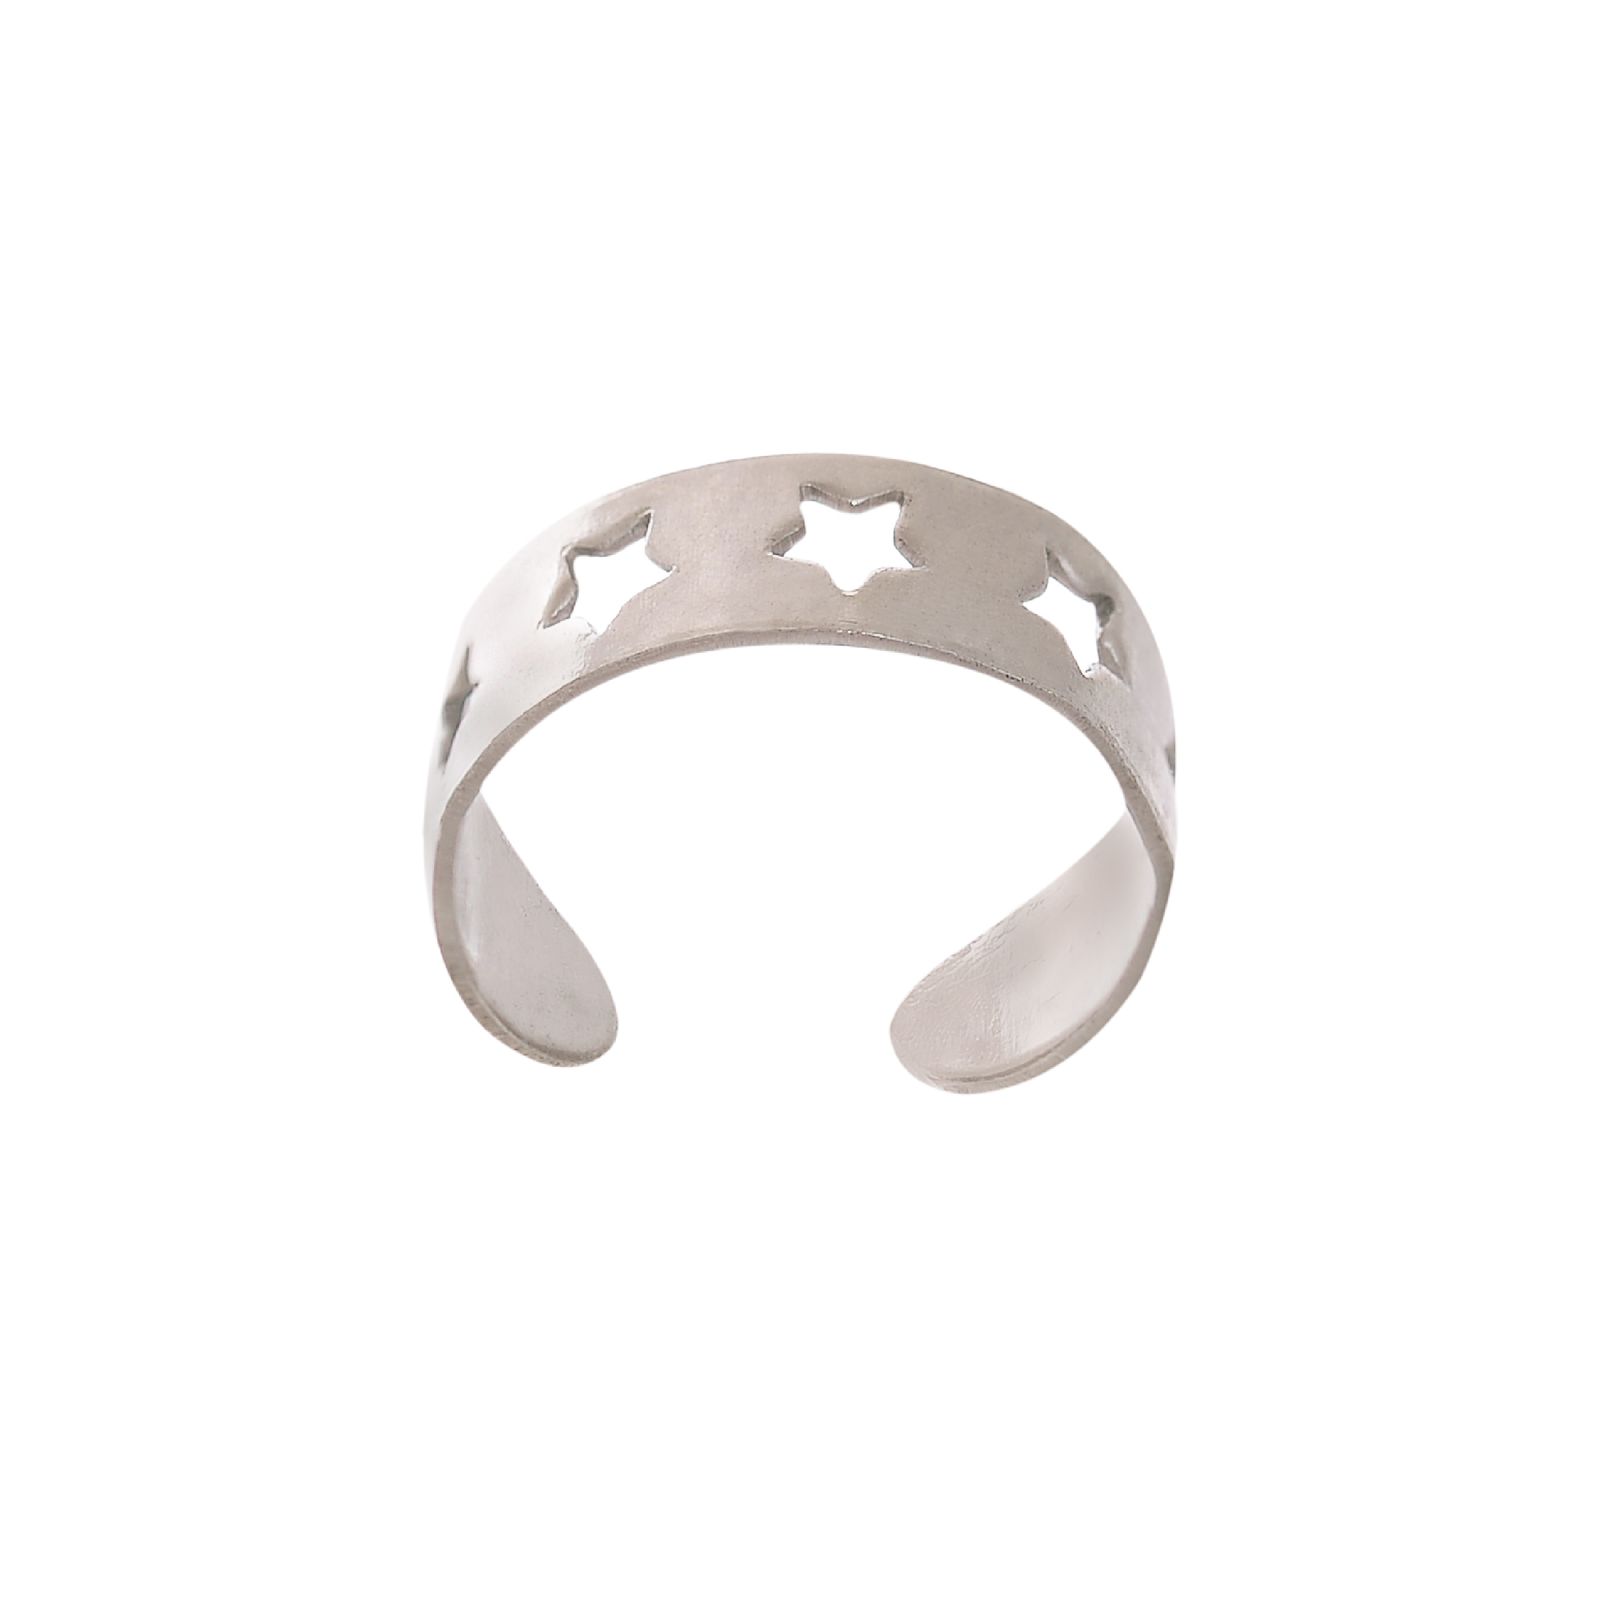 انگشتر پا زنانه ماصرم طرح ستاره کد Ri3076 -  - 1